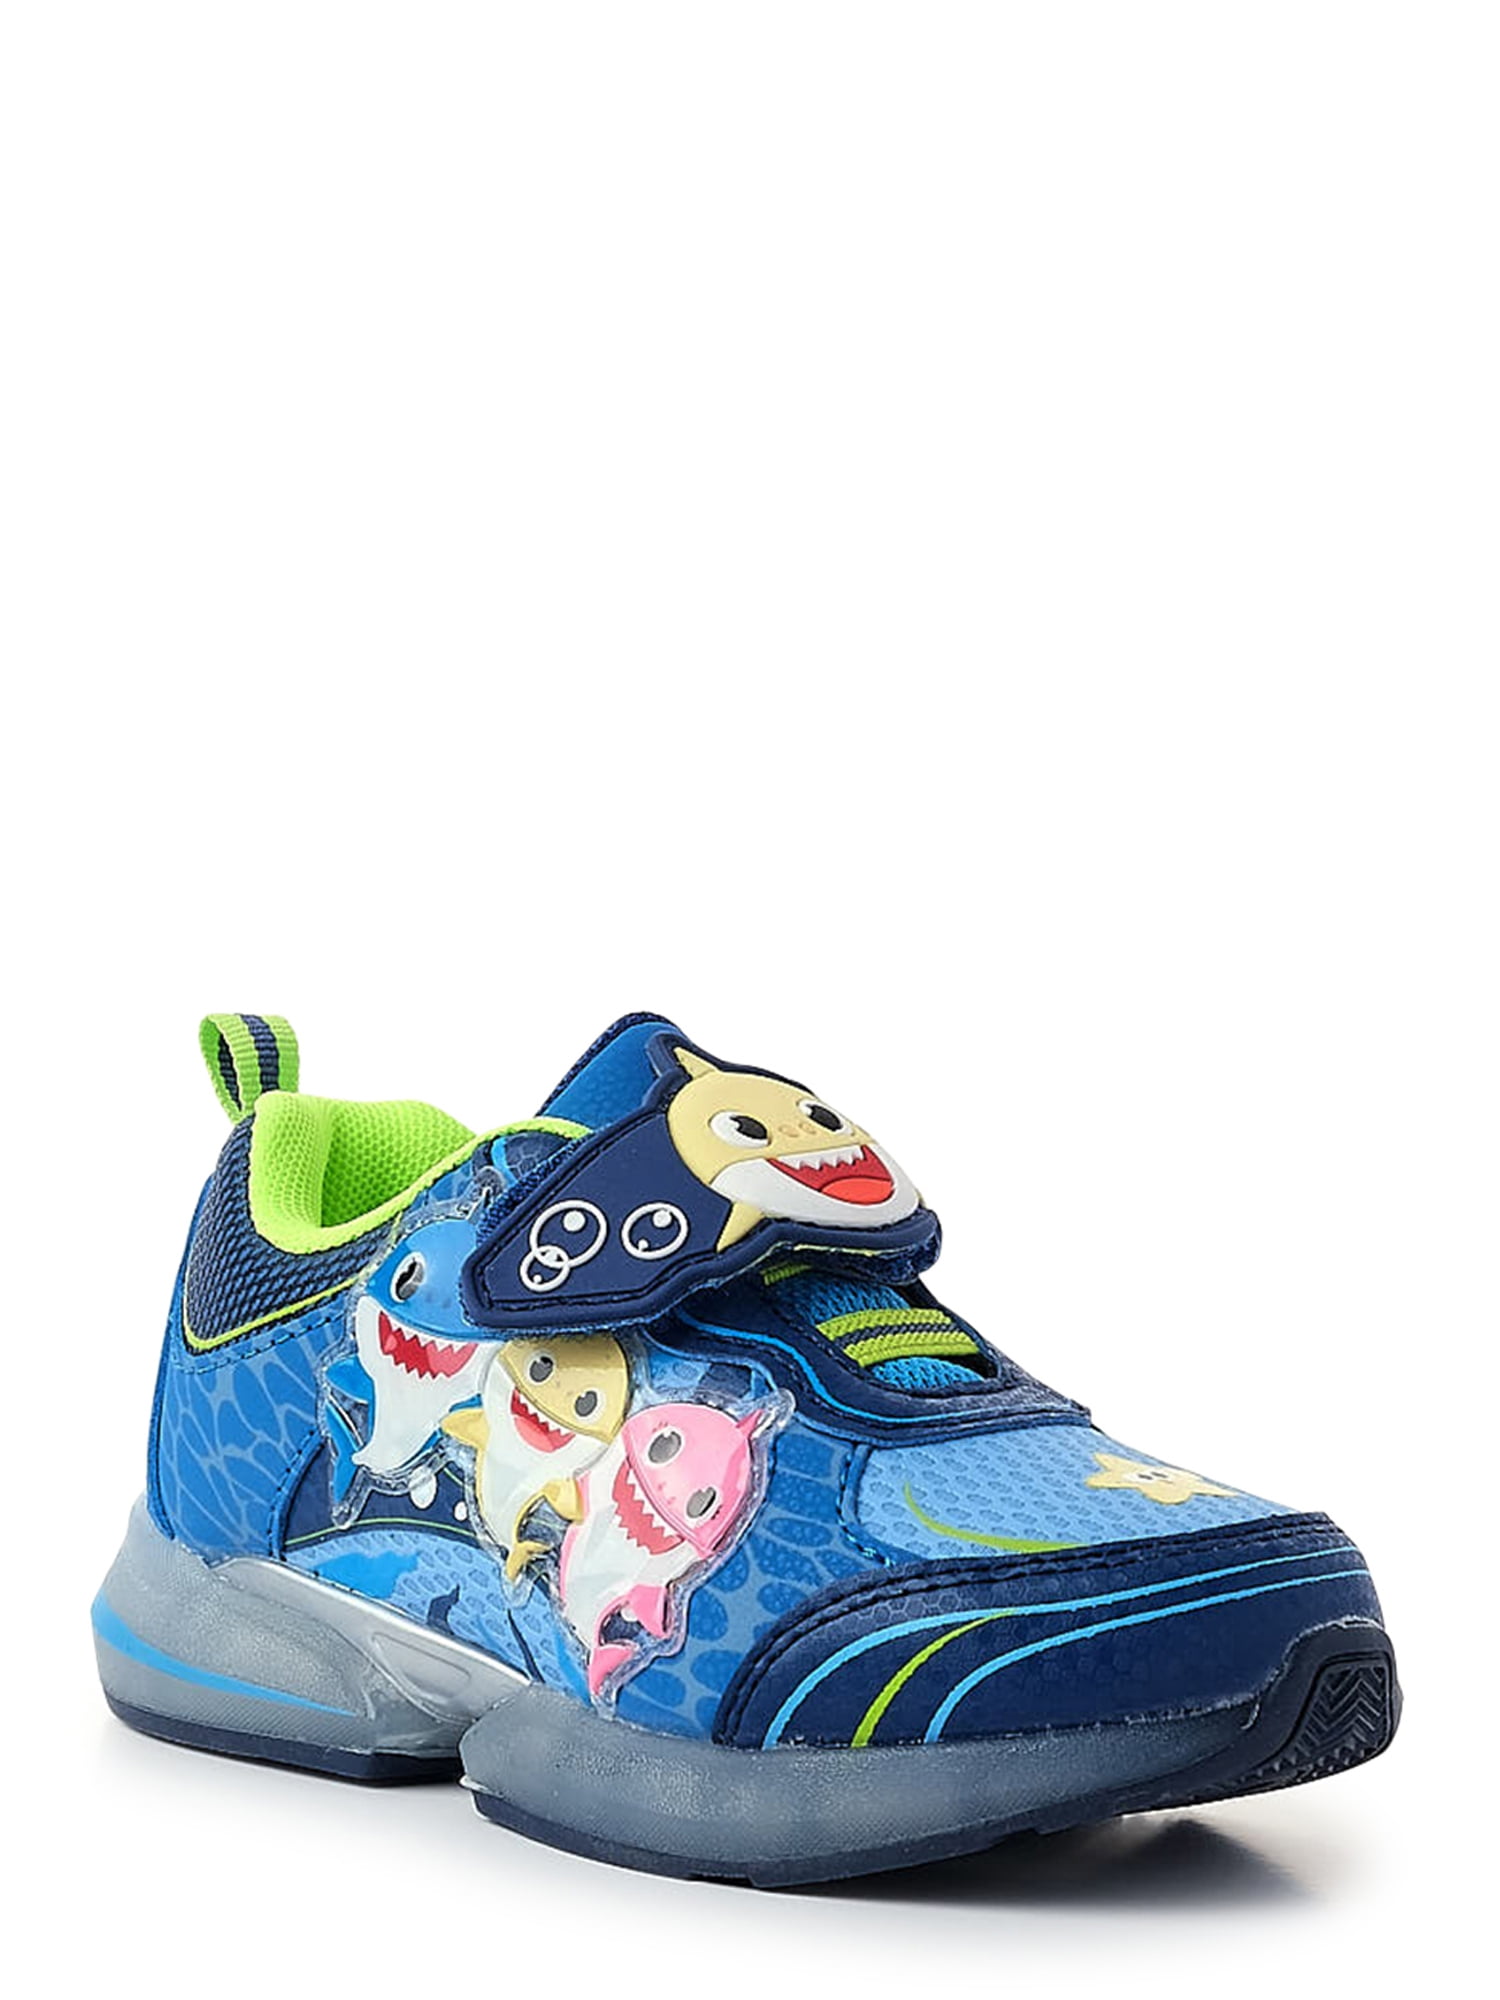 Boys Girls Kids Disney Cars Paw Patrol Swim Shoes Aqua Socks Children Size 5-11 